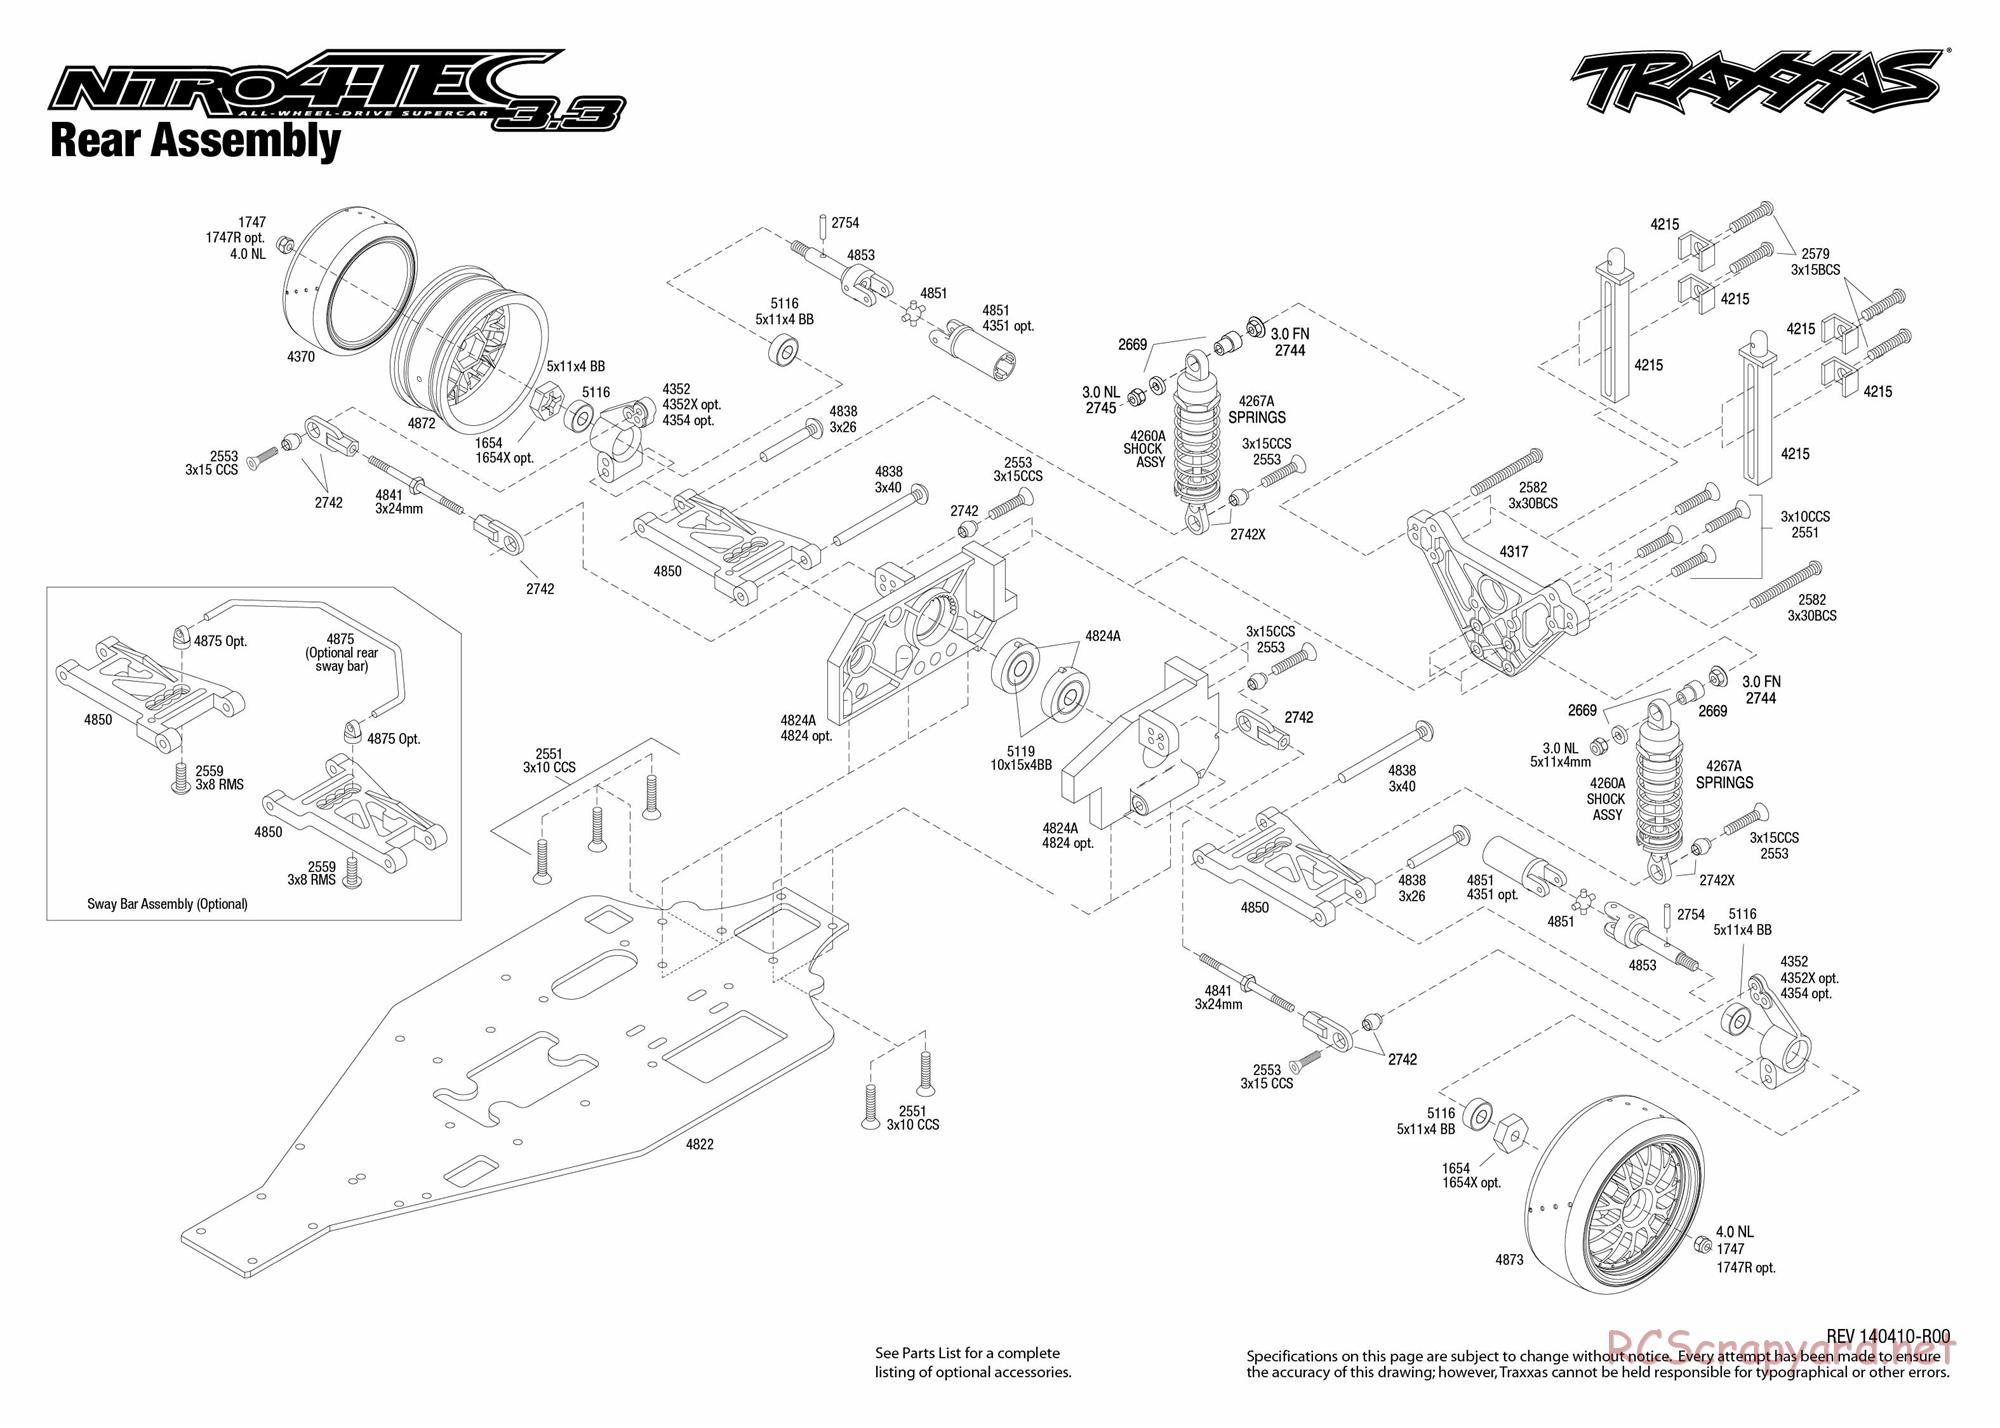 Traxxas - Nitro 4-Tec 3.3 (2014) - Exploded Views - Page 3